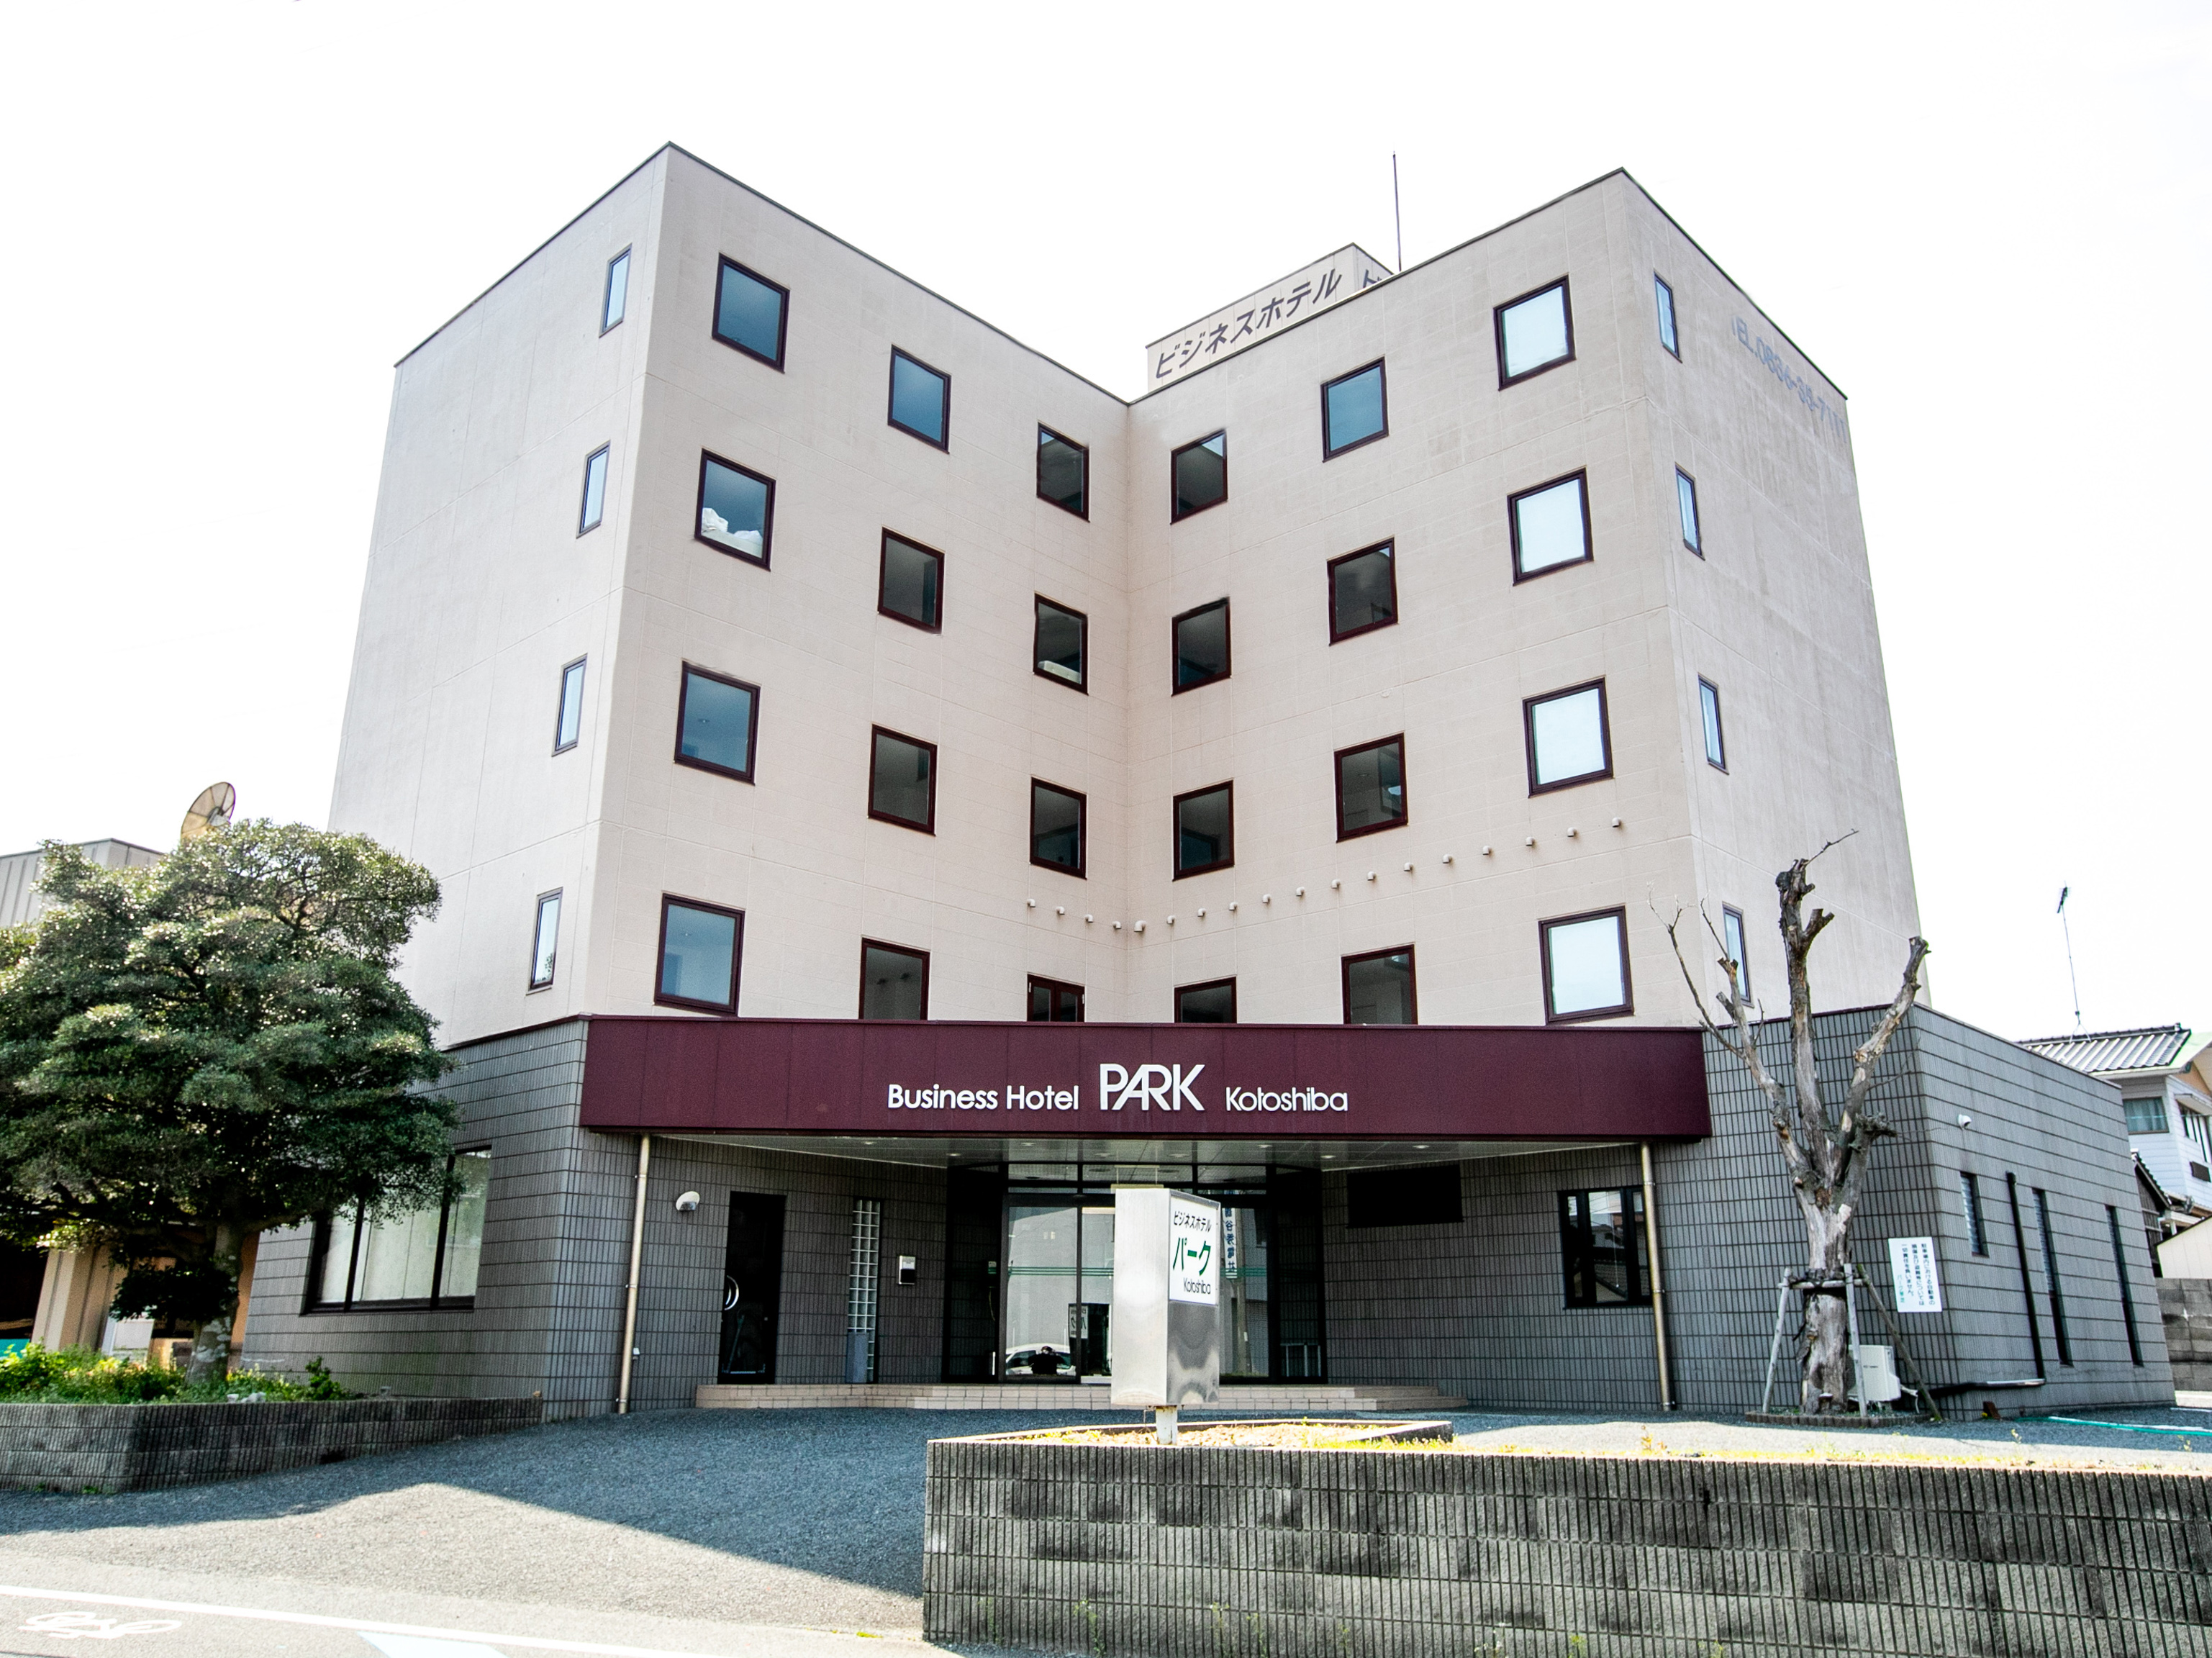 Business Hotel Park Kotoshiba